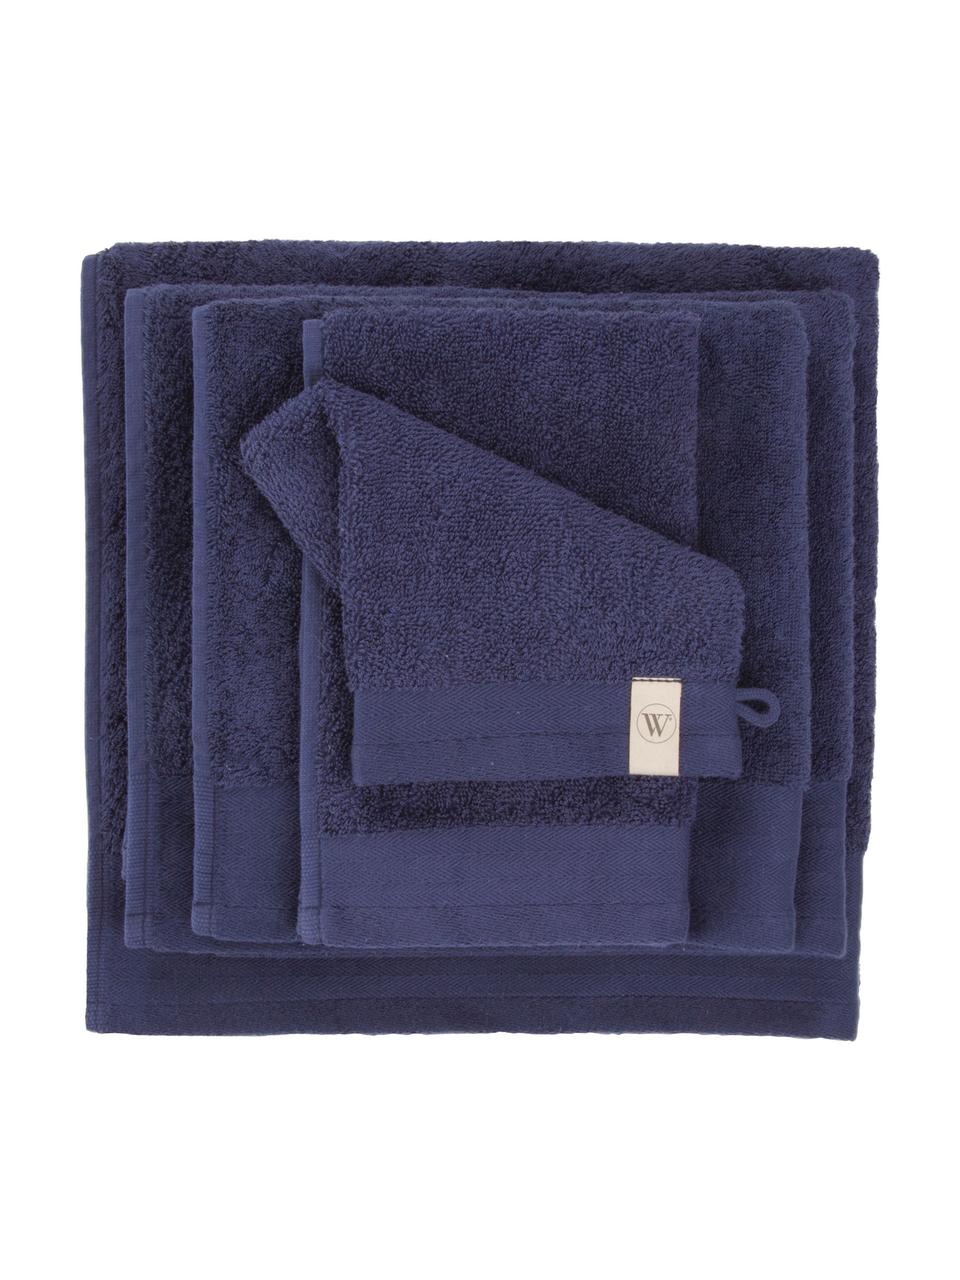 Washandjes Soft Cotton, 2 stuks, Marineblauw, B 16 x L 21 cm